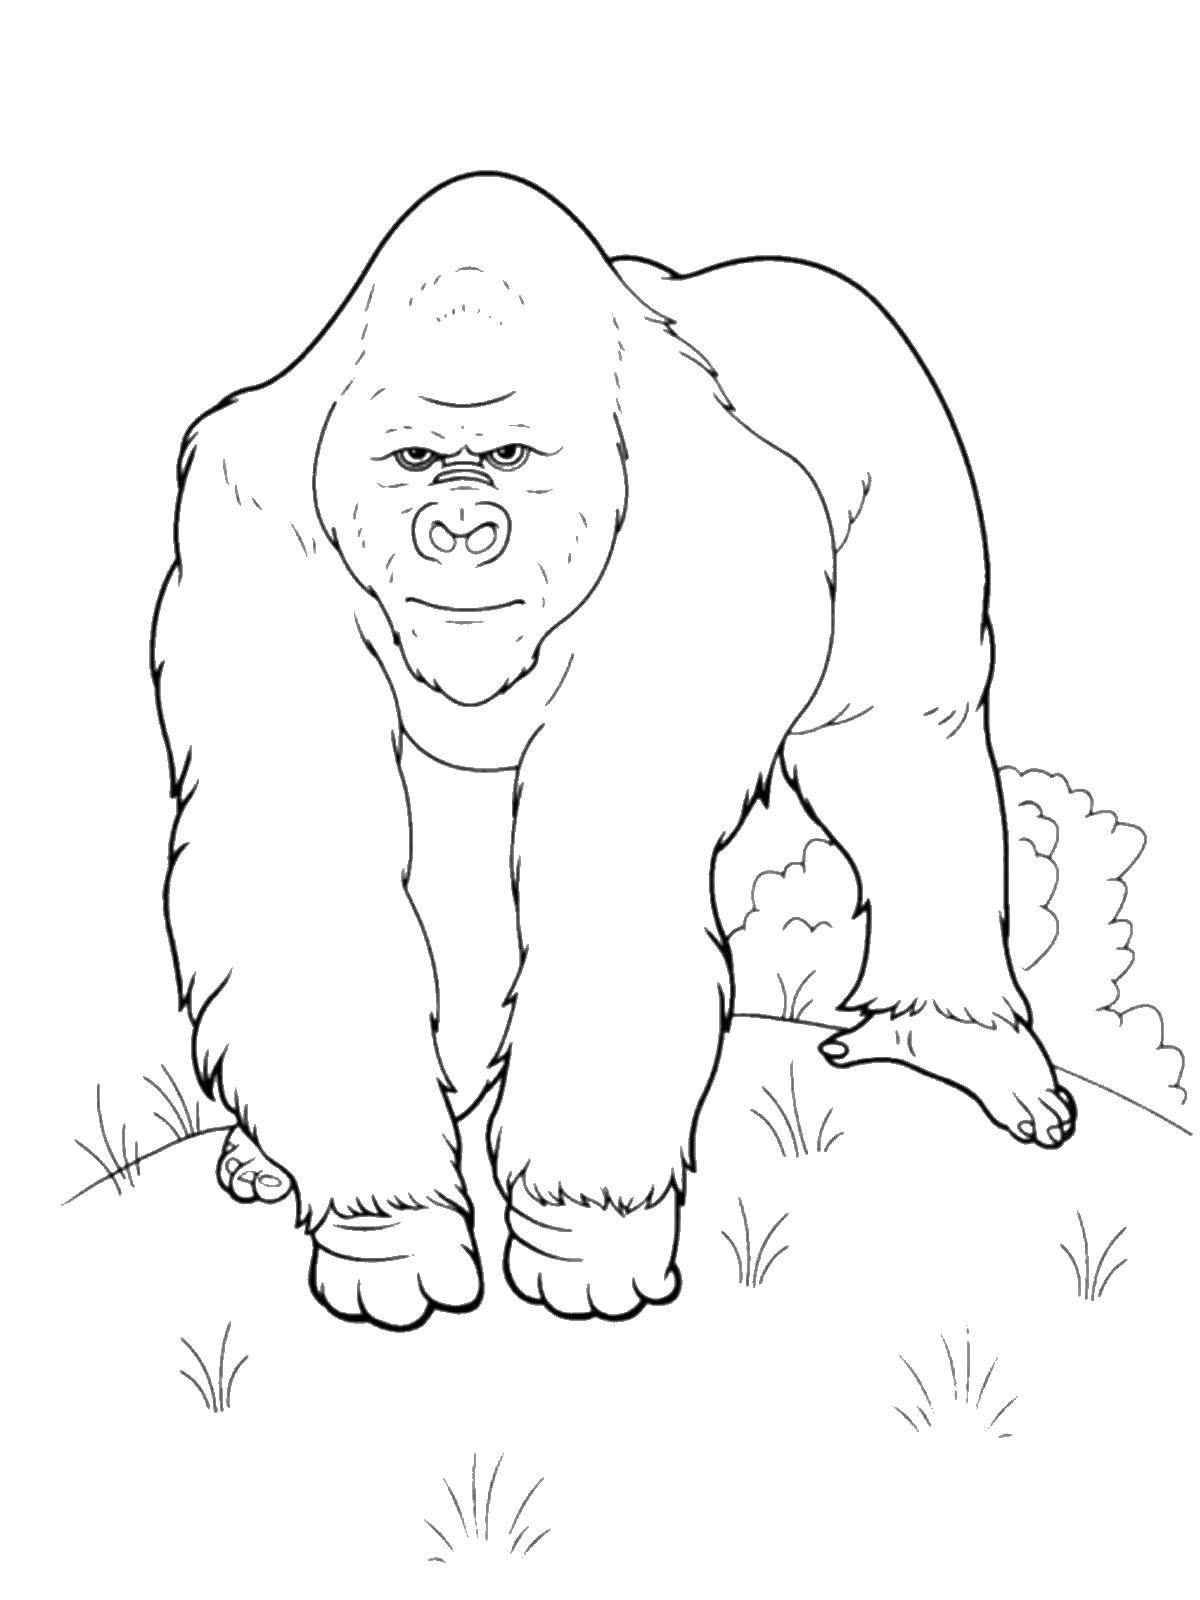 Coloring Gorilla. Category wild animals. Tags:  gorilla.